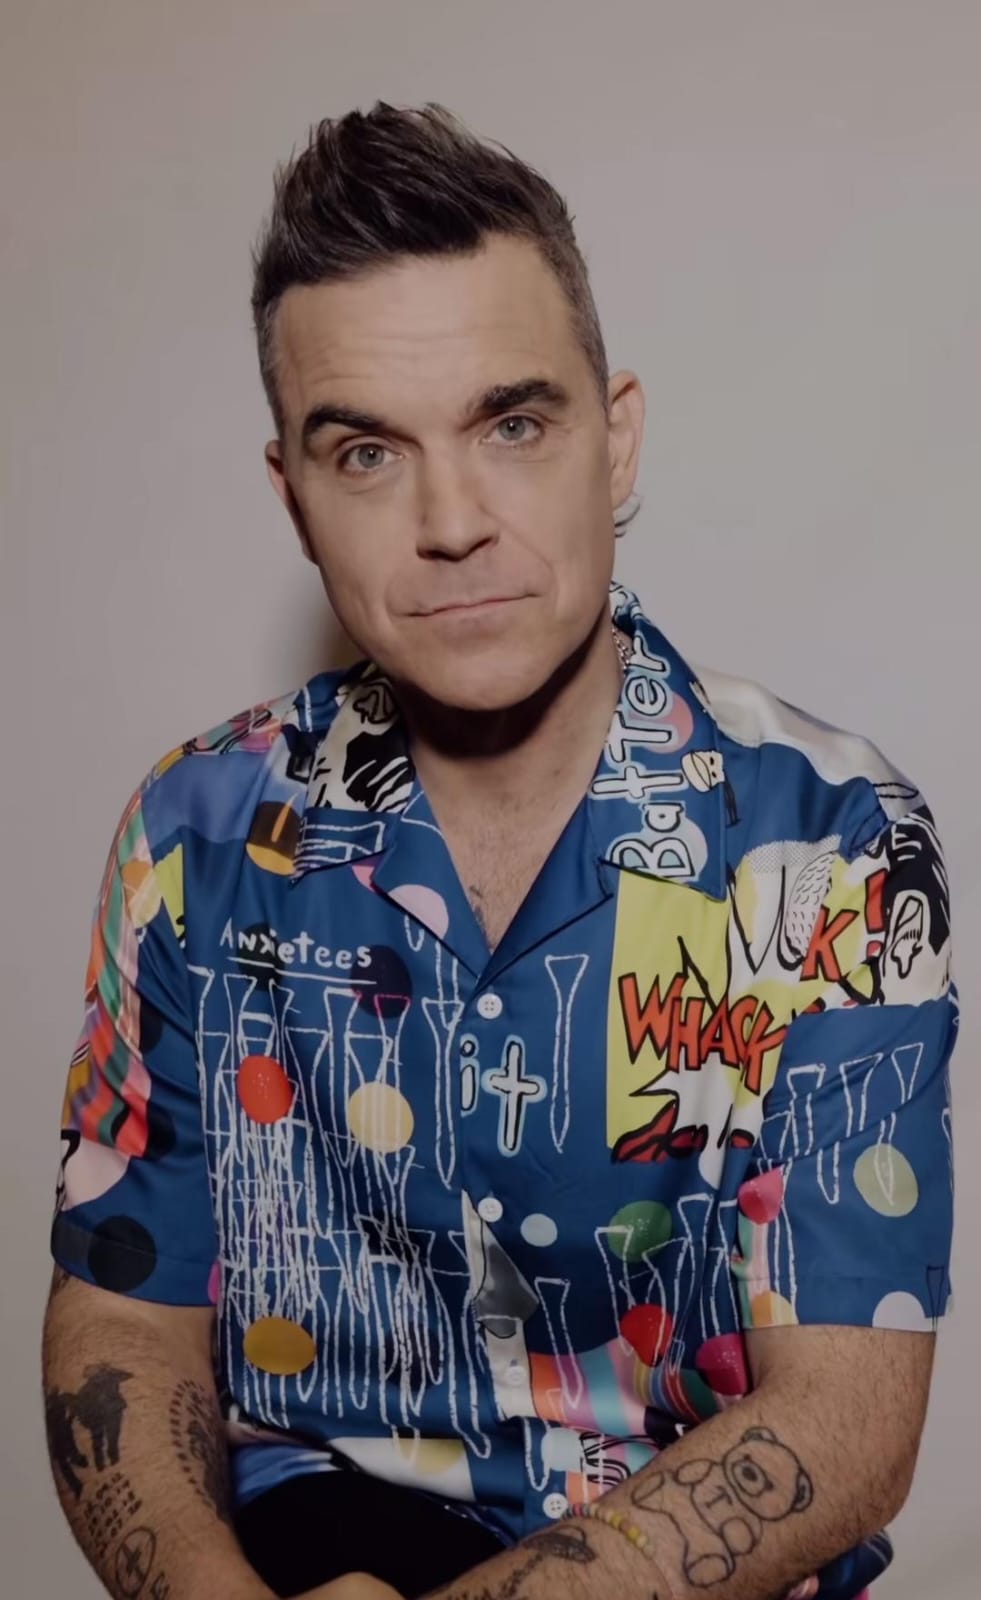 Feel Robbie Williams